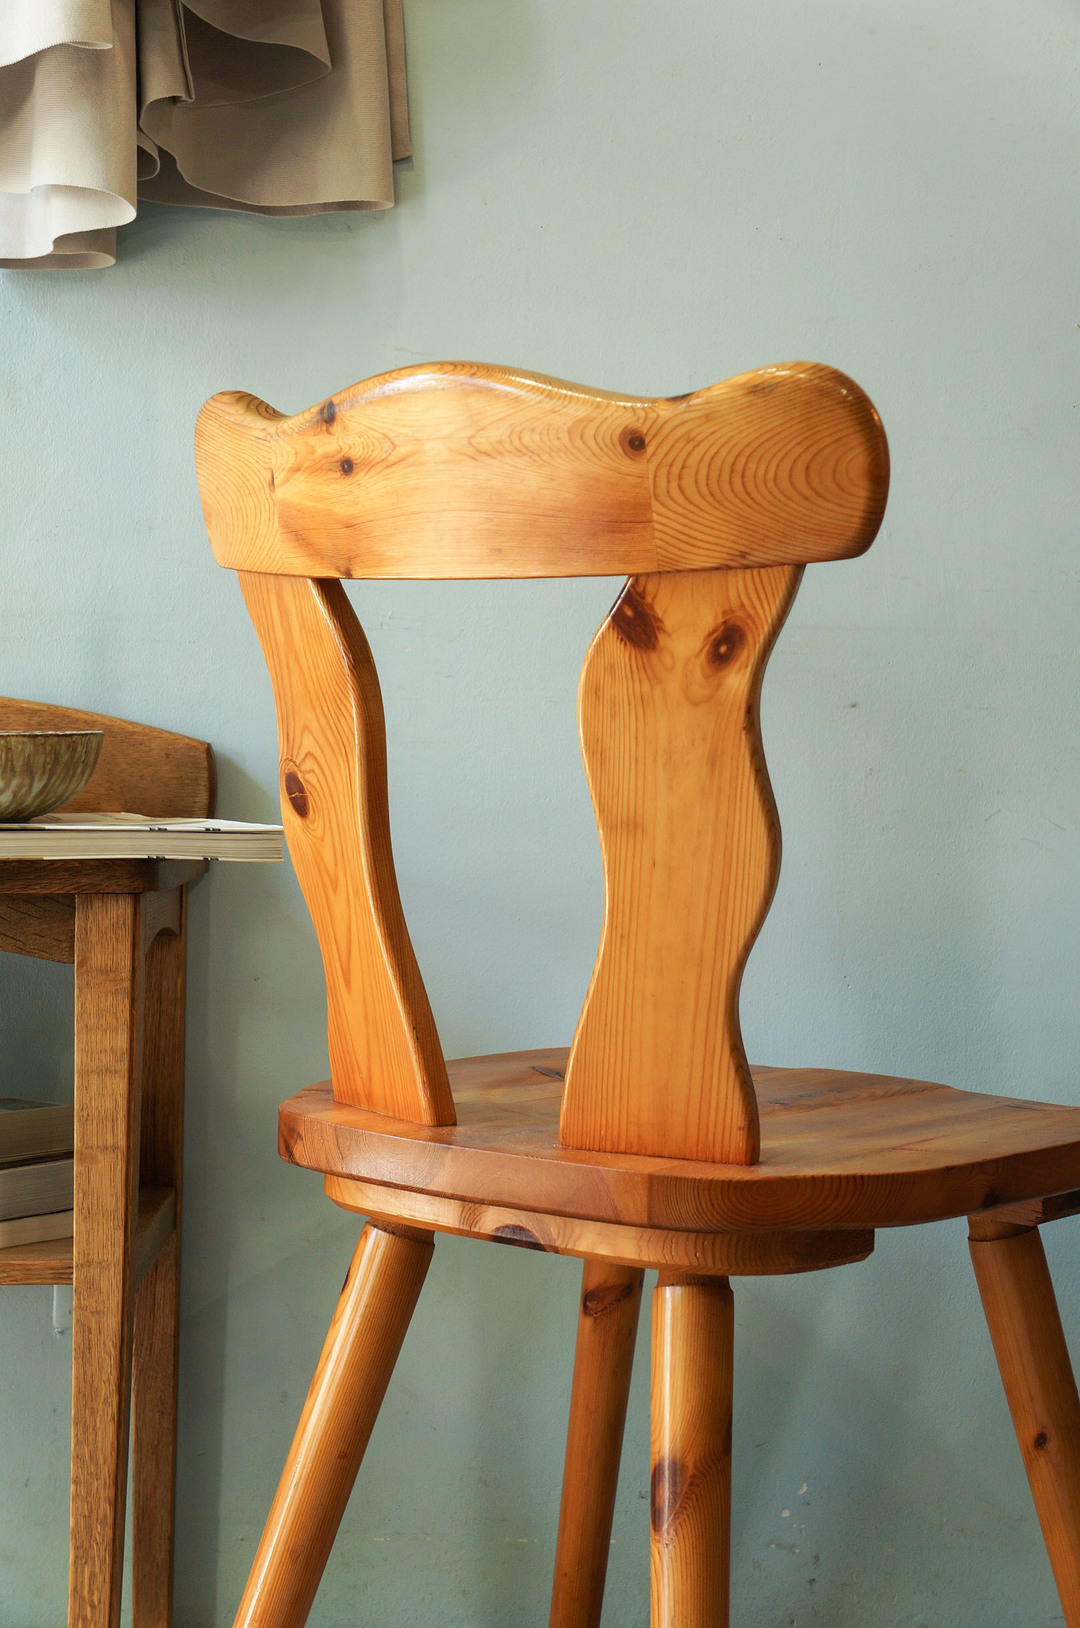 Pinewood Dining Chair Country Style/パイン材 ダイニングチェア カントリースタイル 椅子 ナチュラル